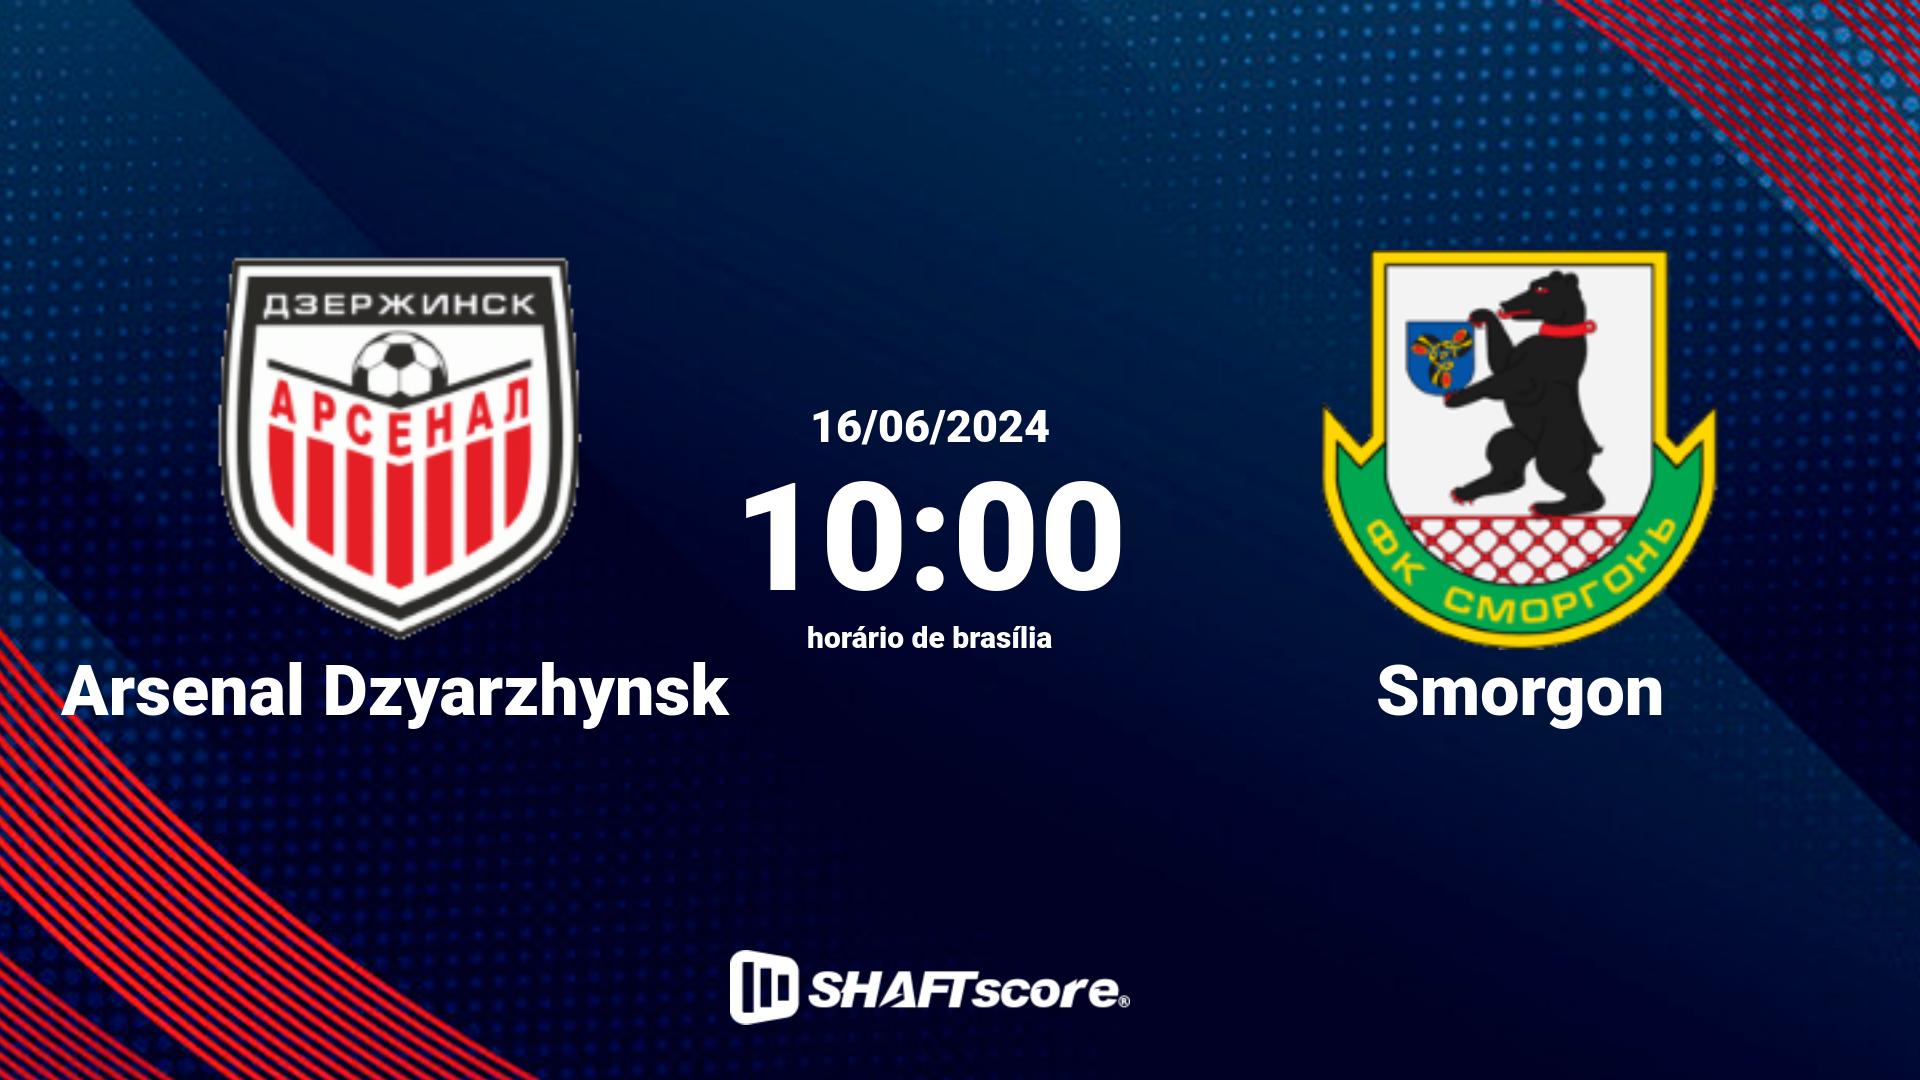 Estatísticas do jogo Arsenal Dzyarzhynsk vs Smorgon 16.06 10:00